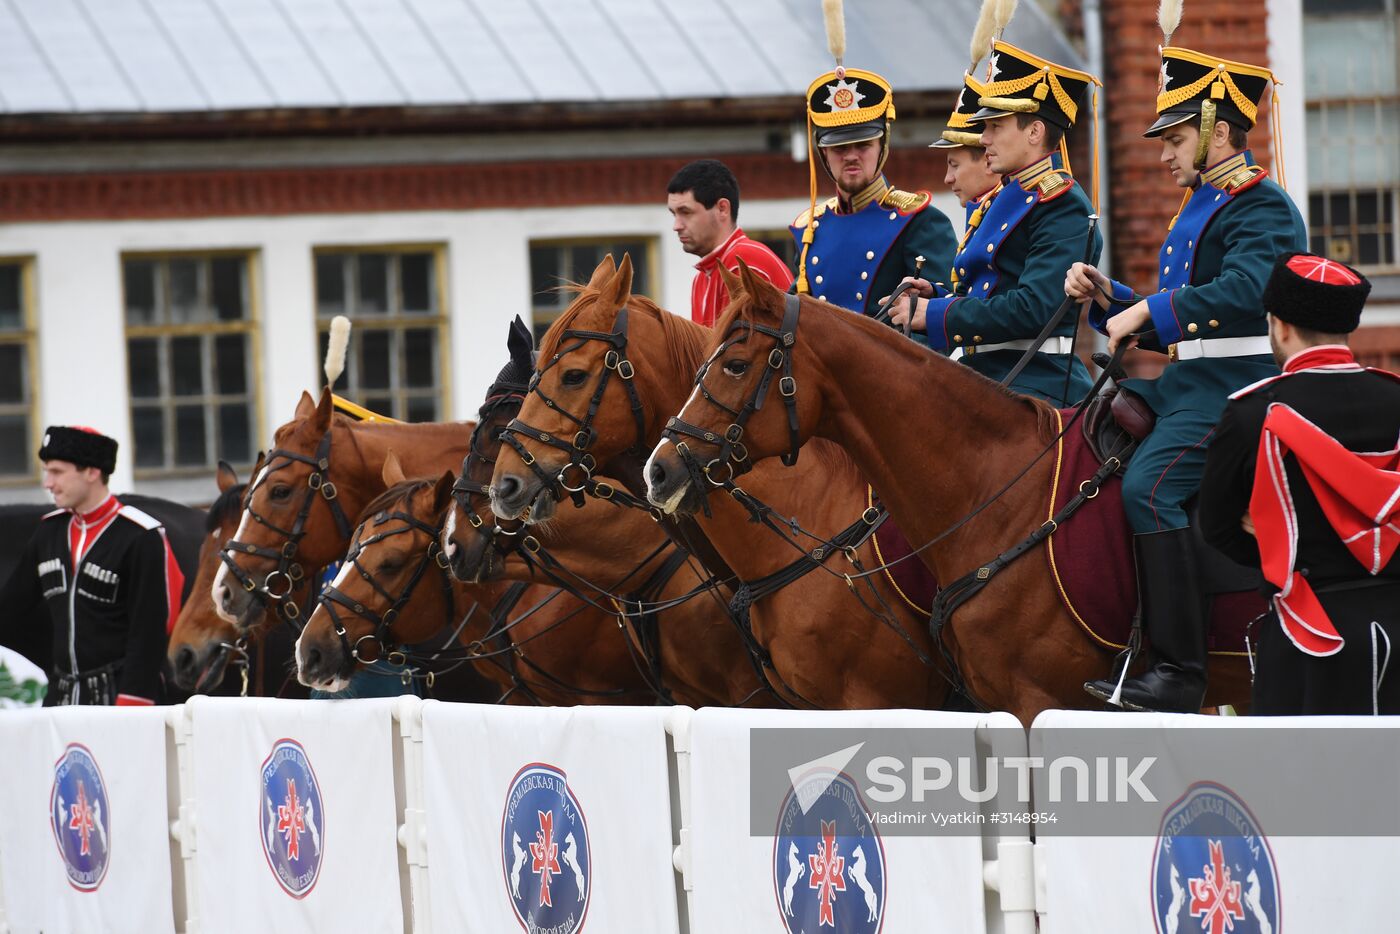 Performance by Kremlin Equestrian School students